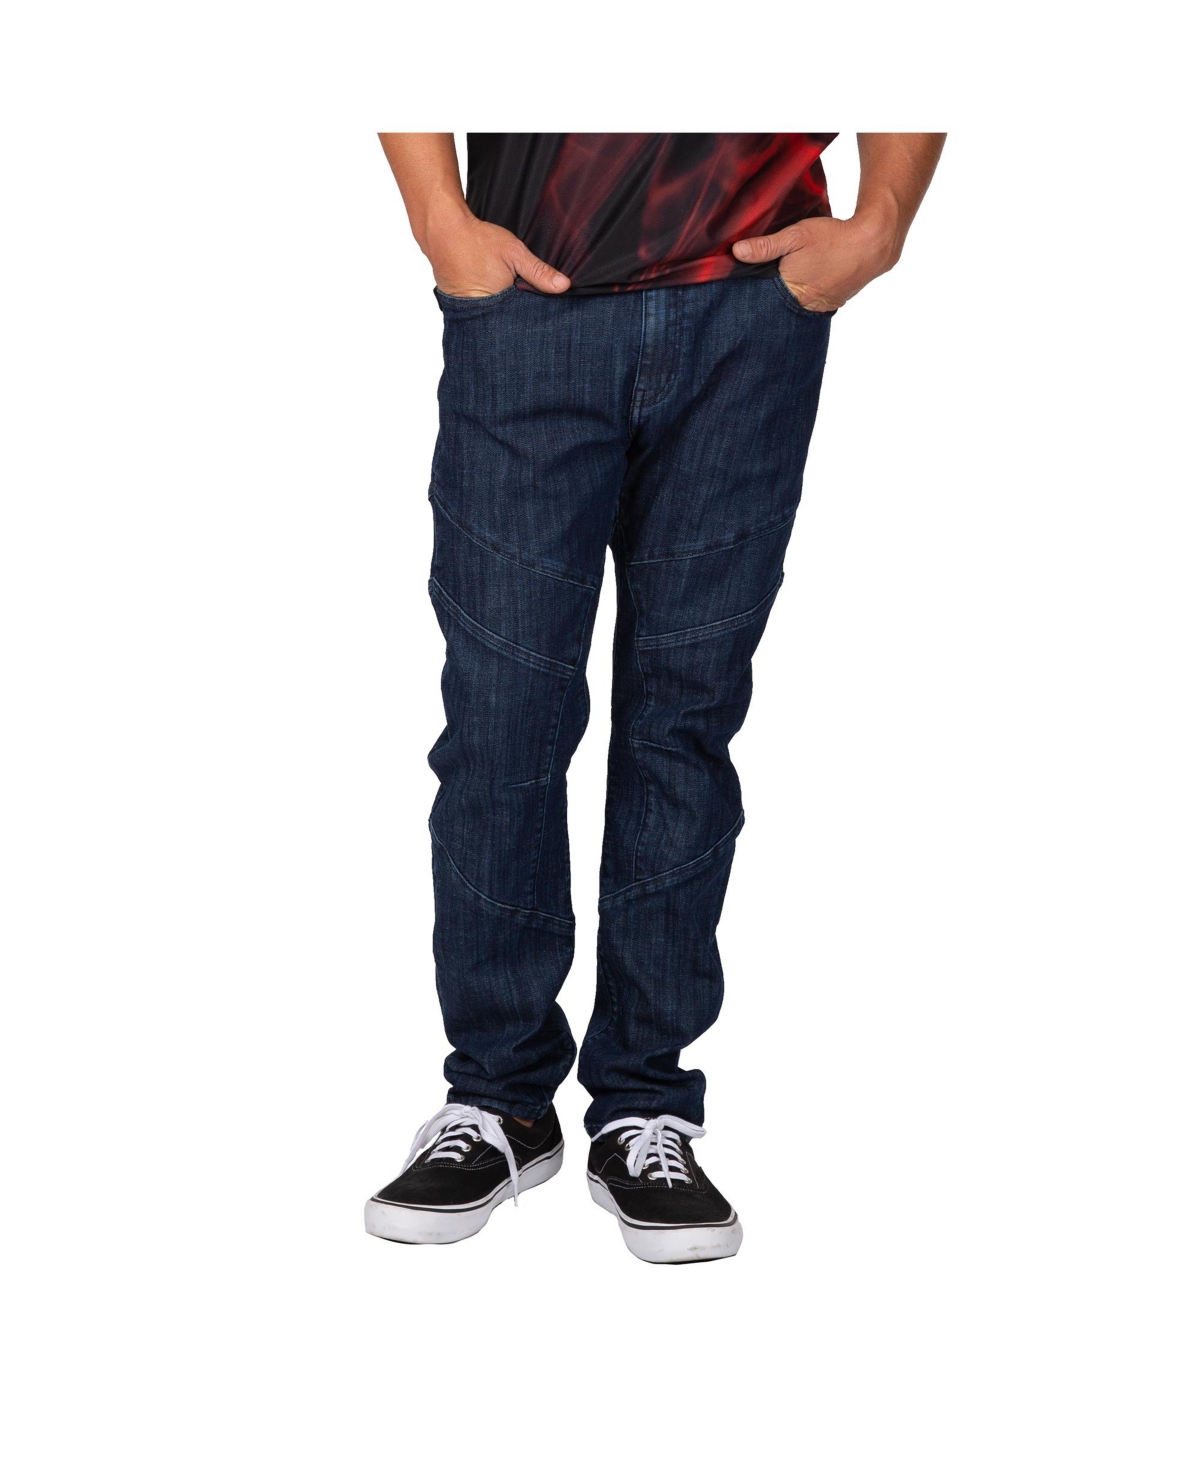 Men's Cut & Sewn Detail Curved Leg Slim Taper Moto Jeans - Well done black